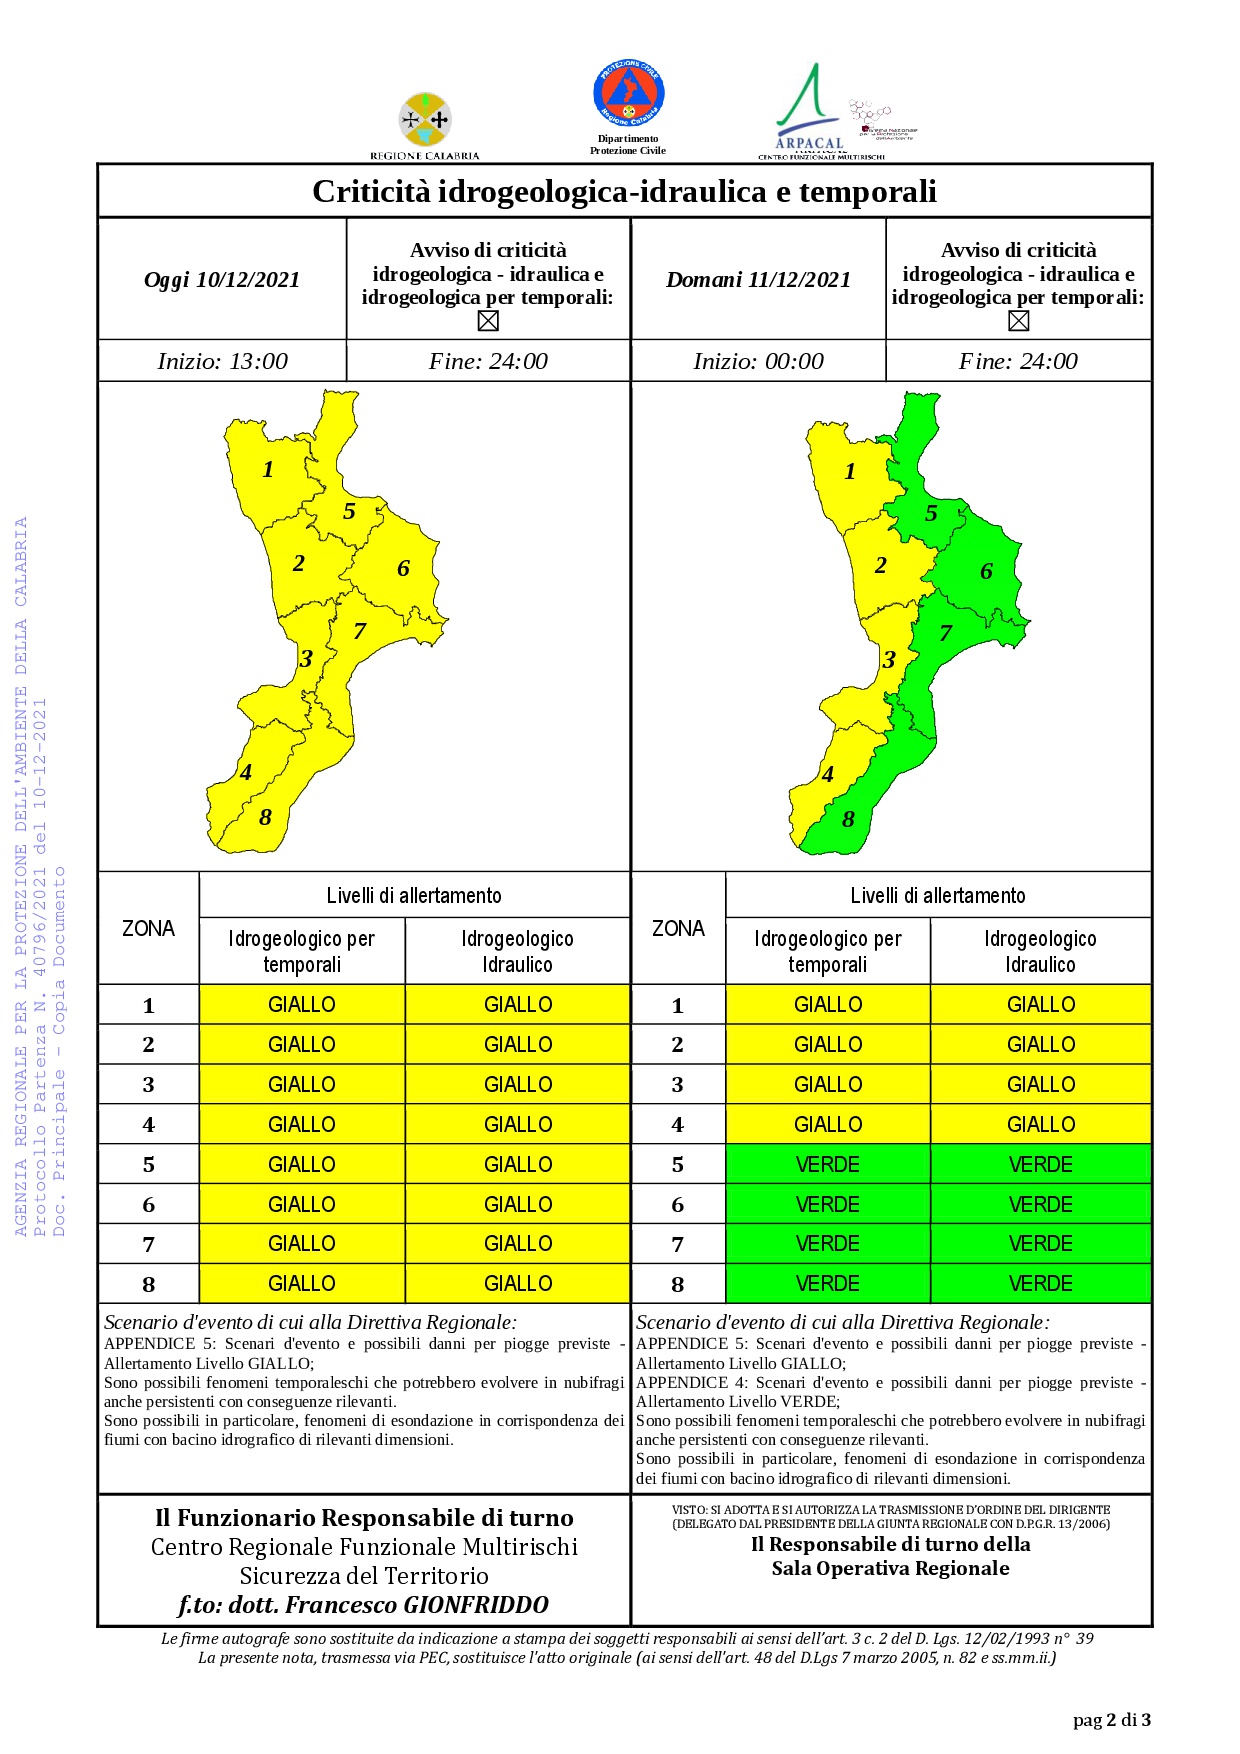 Criticità idrogeologica-idraulica e temporali in Calabria 10-12-2021